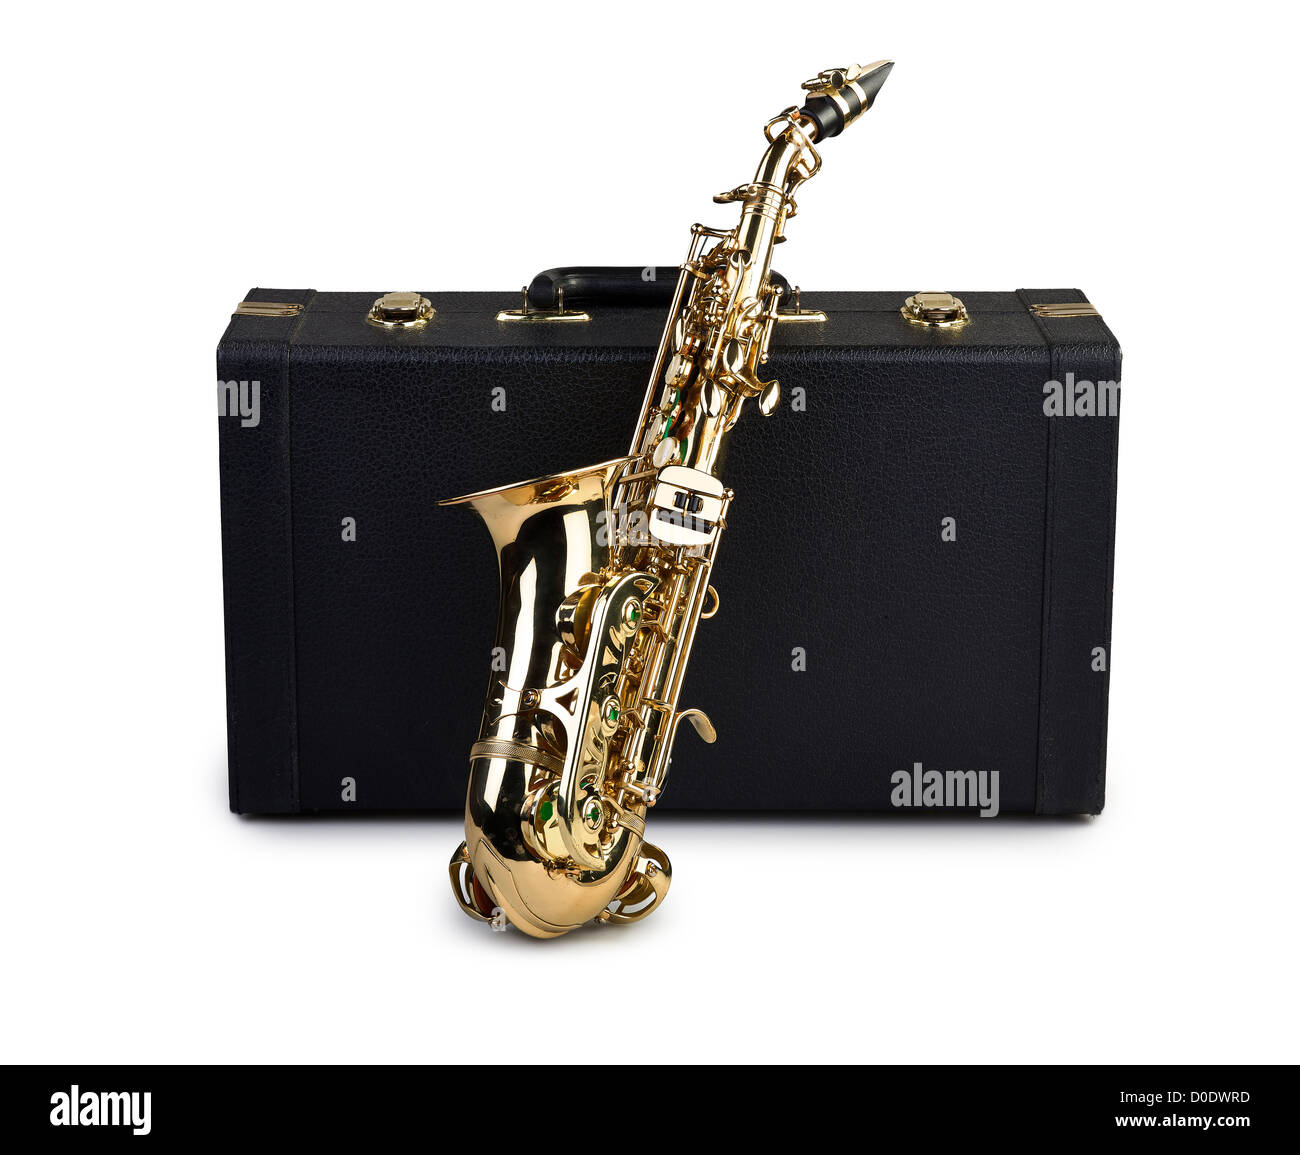 Saxophone and case isolated on white Stock Photo